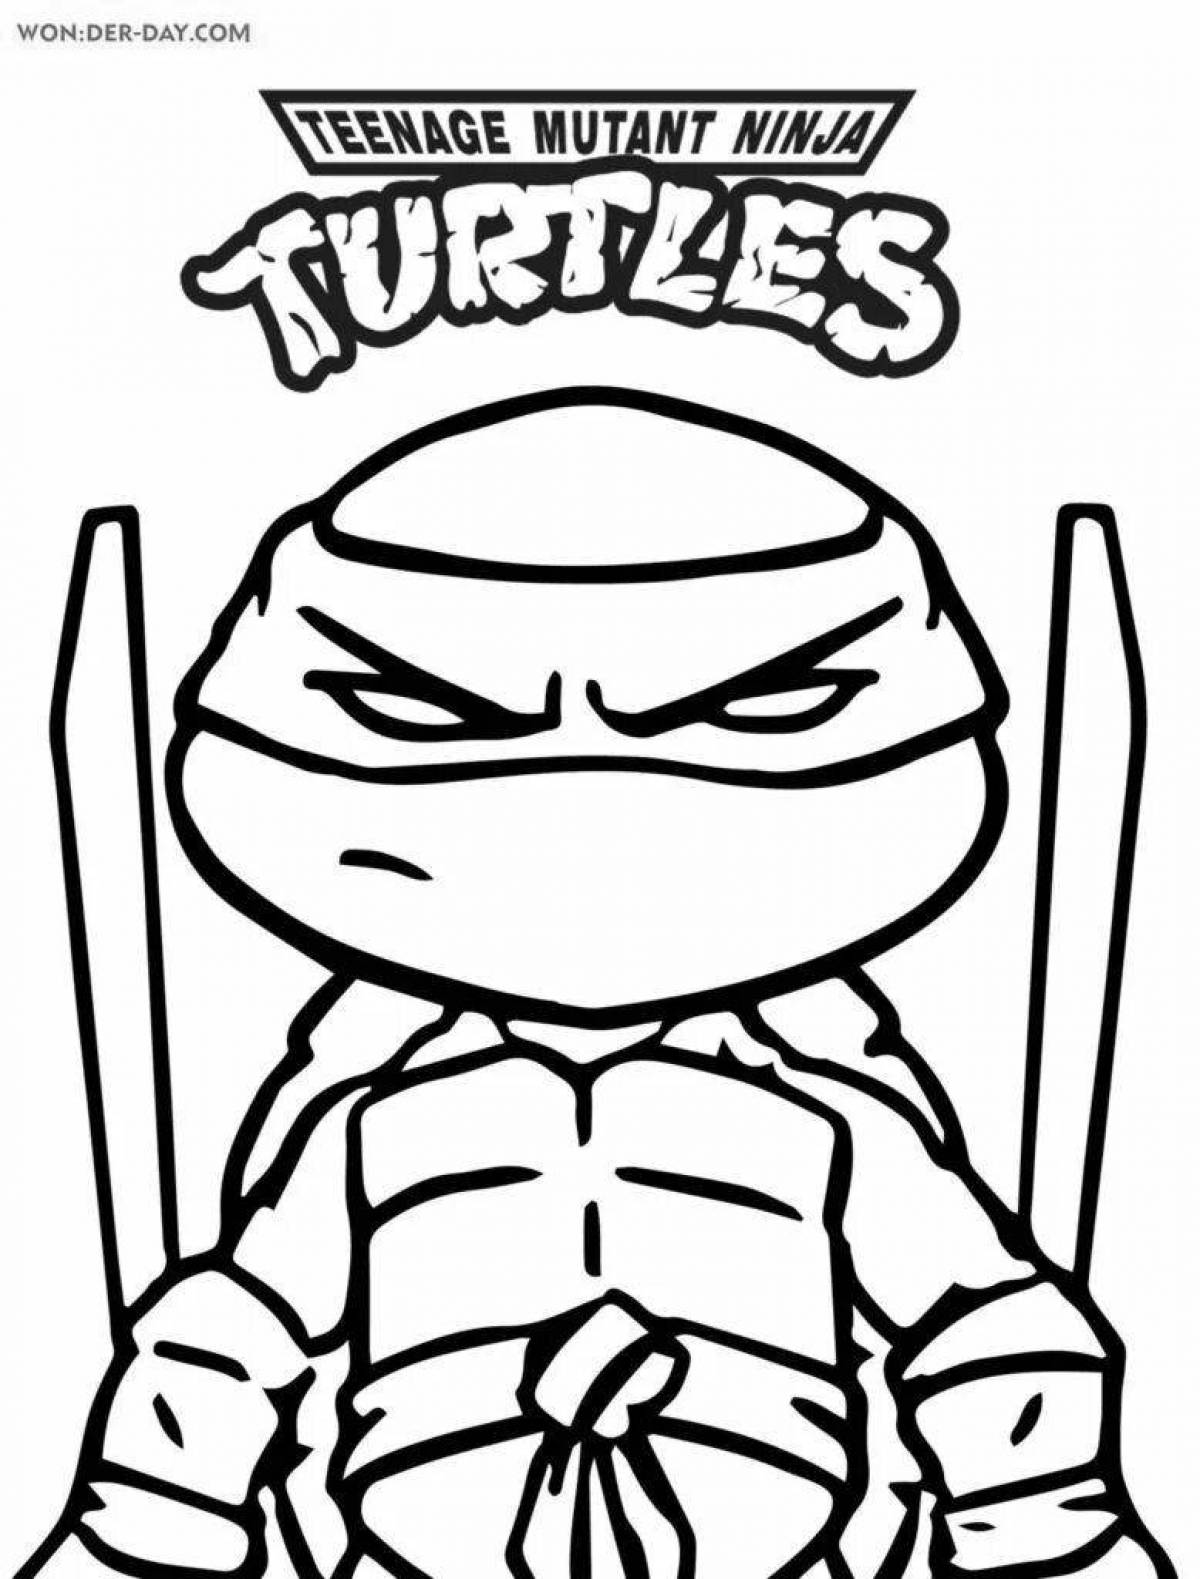 Funny lego ninja turtles coloring book